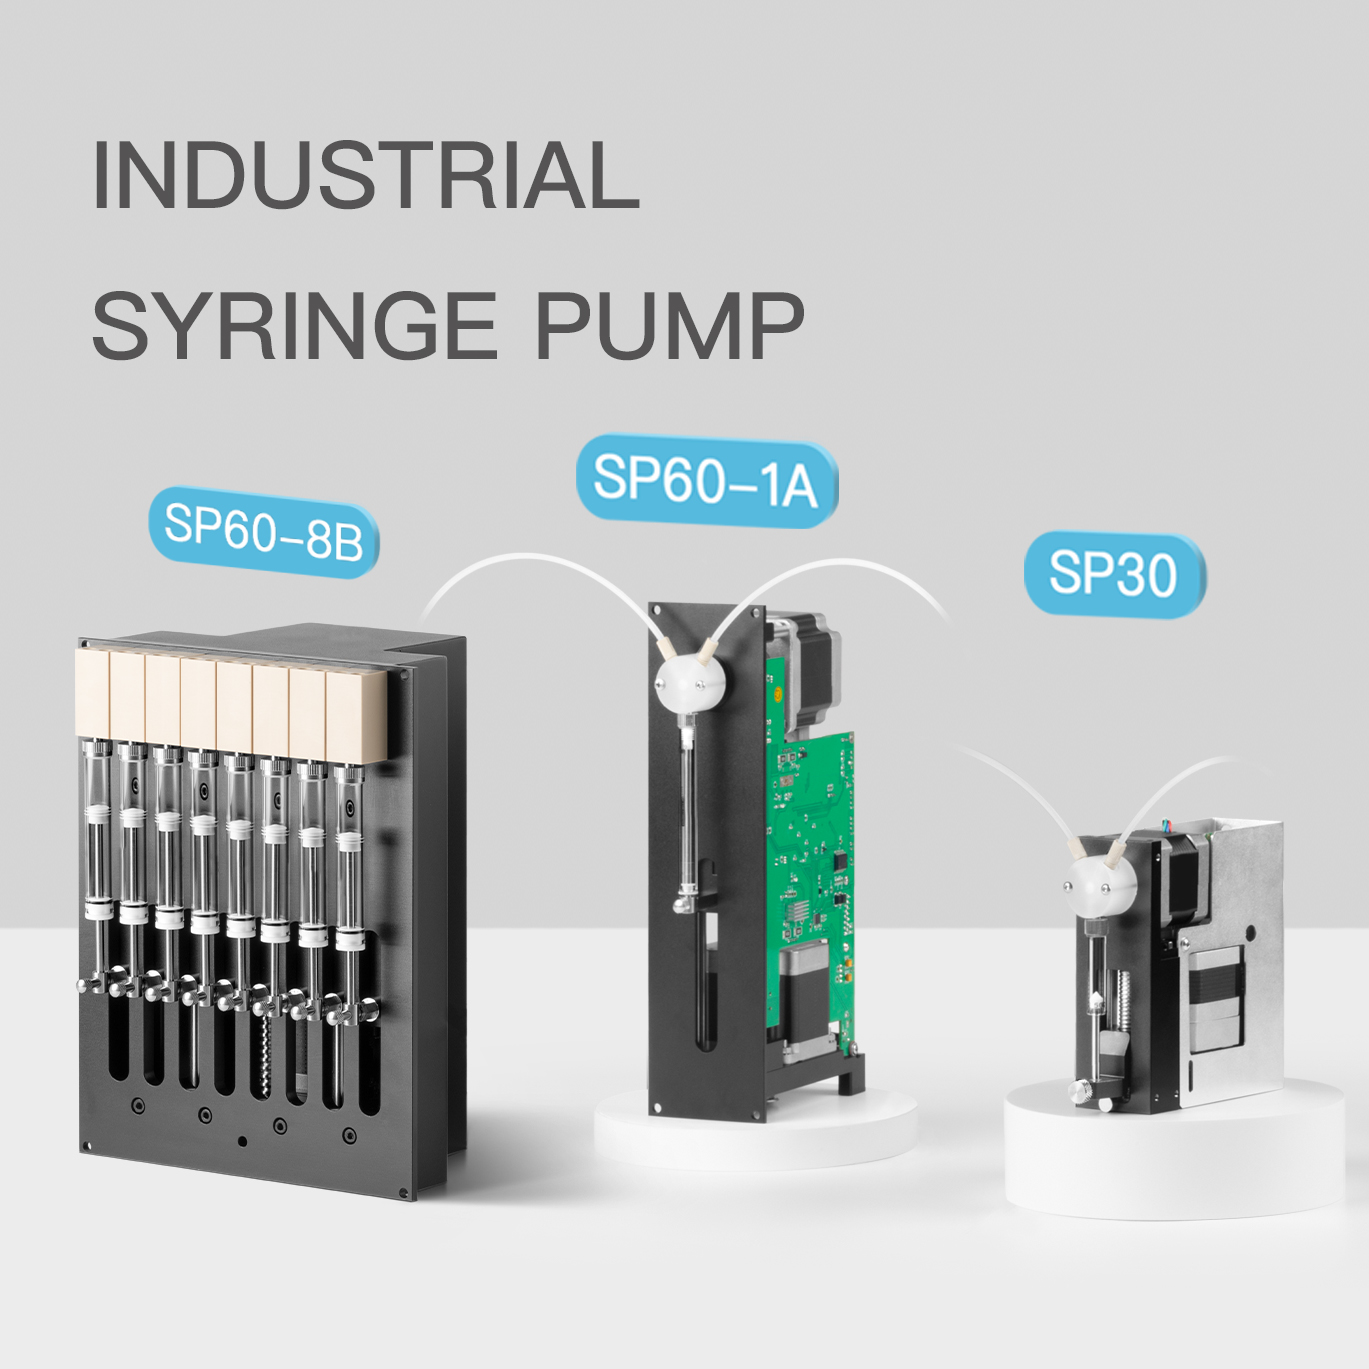 Industrial Syringe Pump